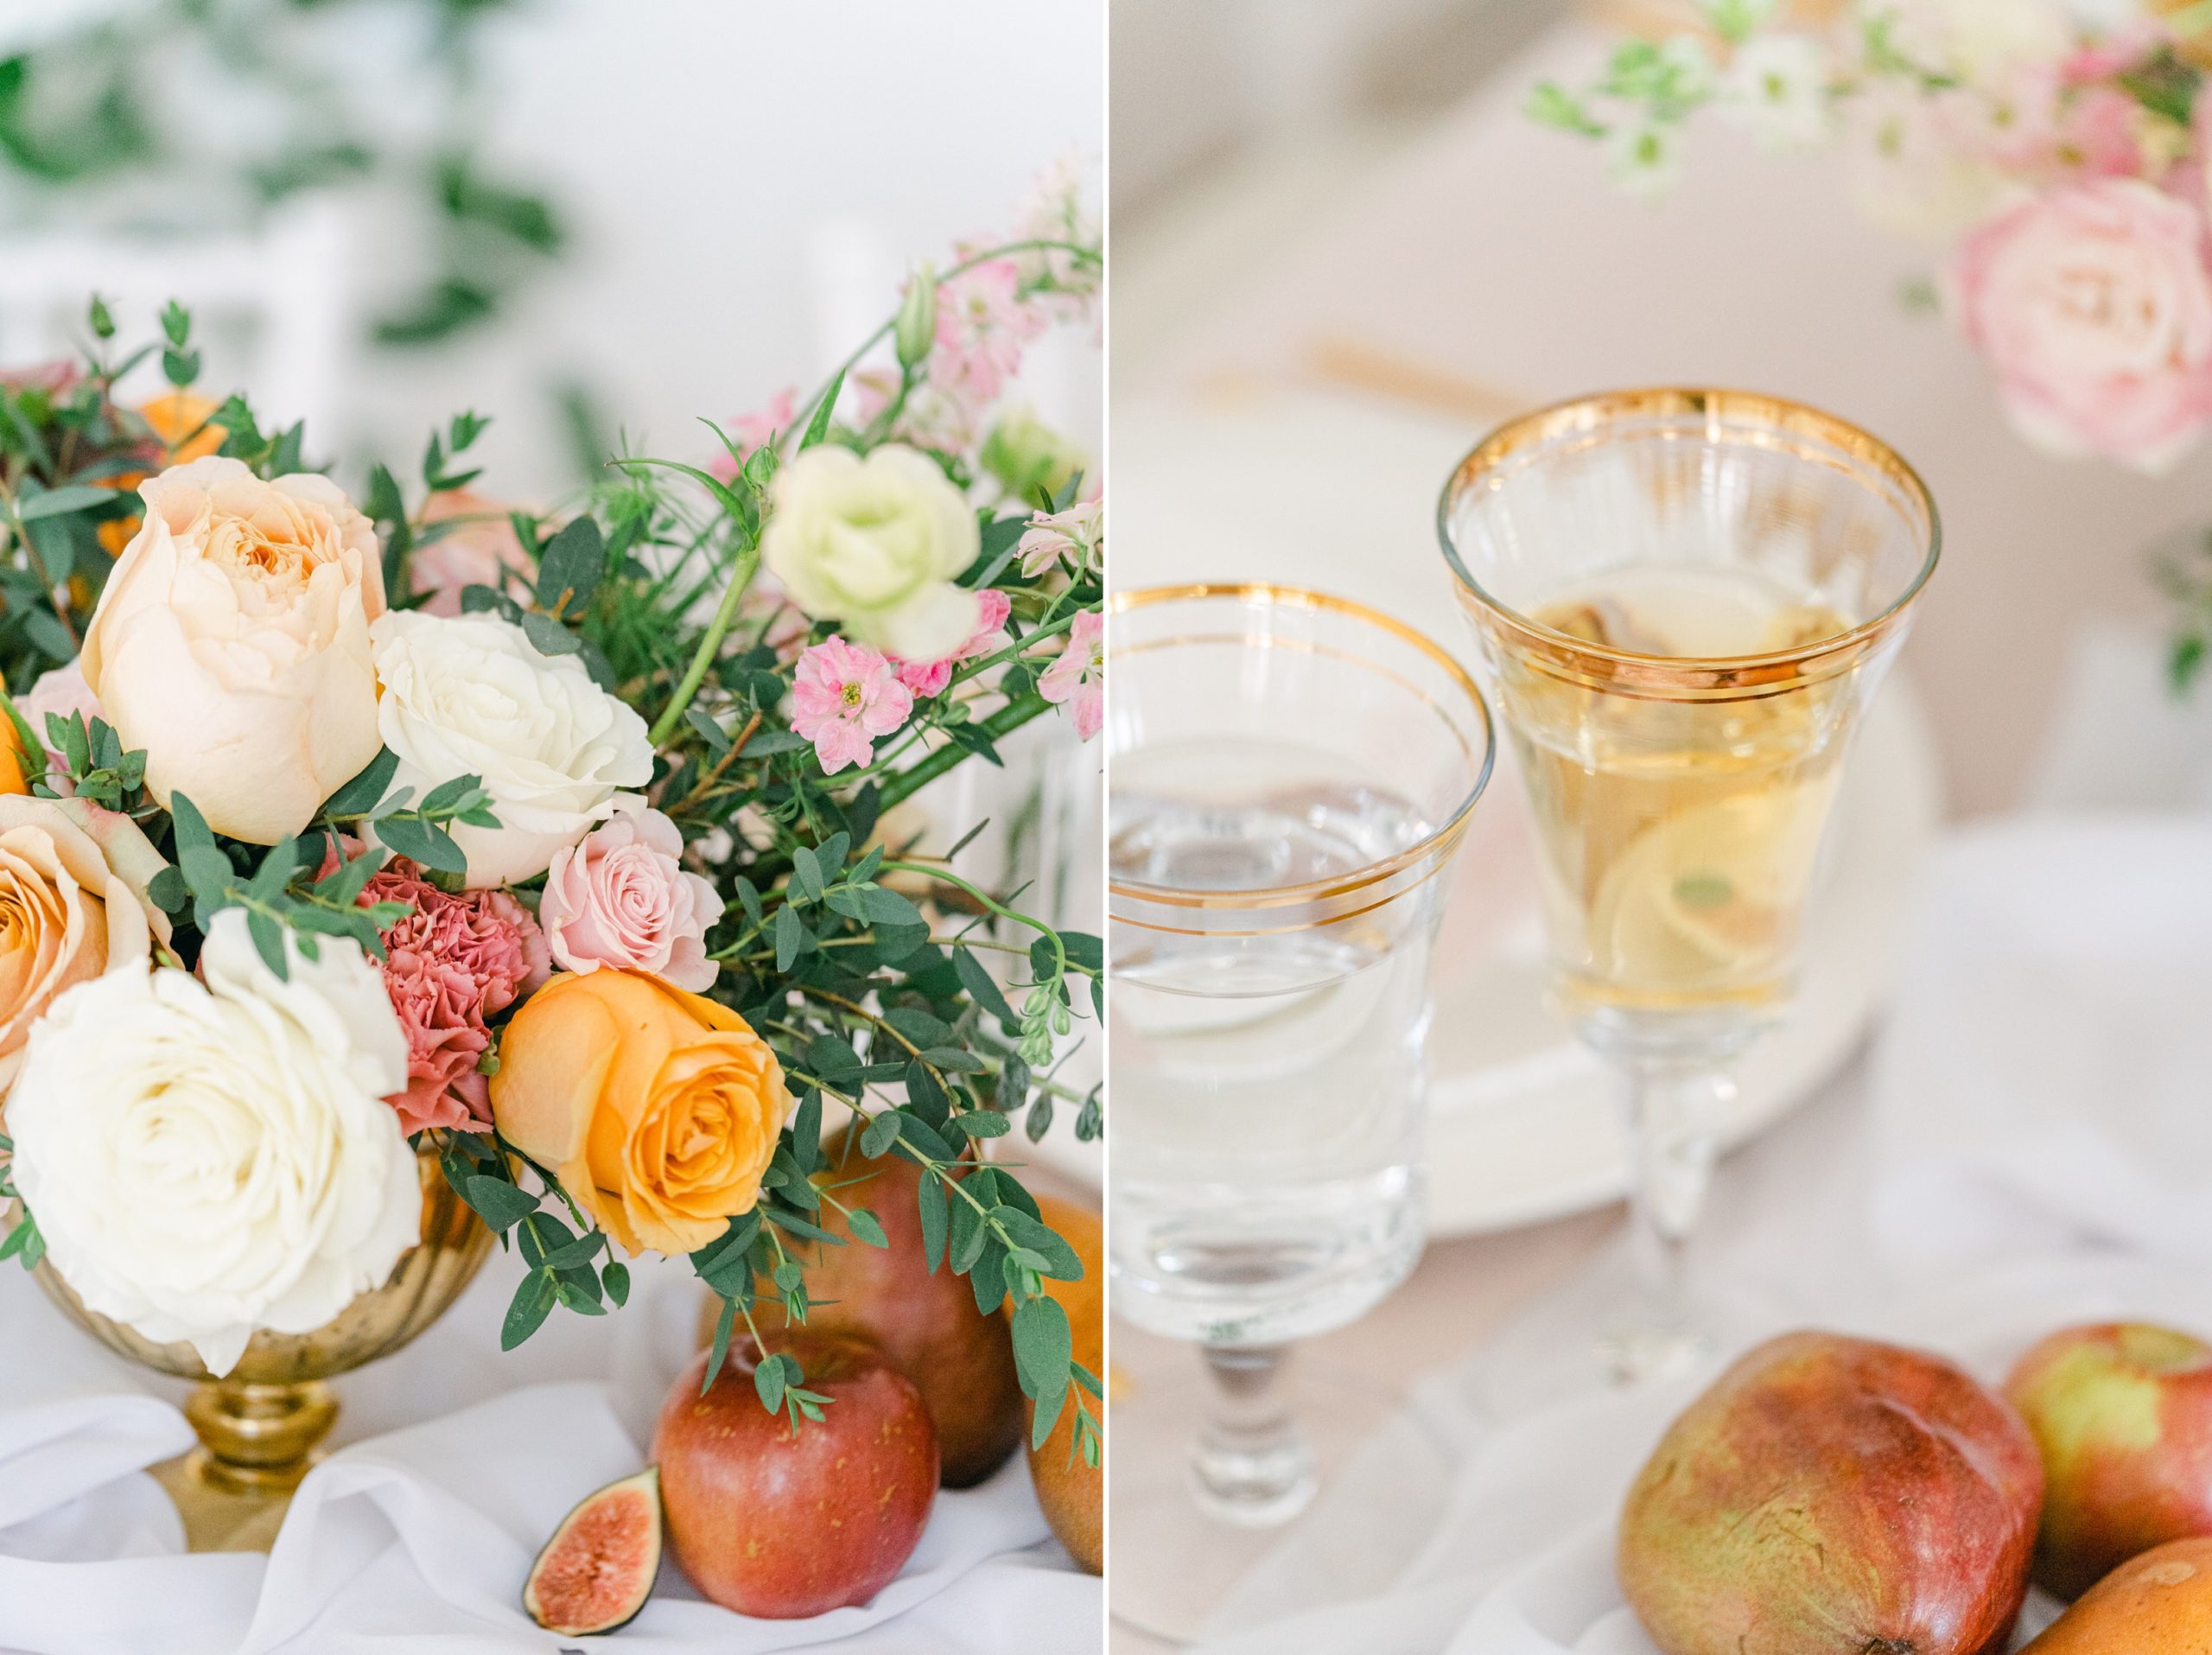 Spring-wedding-inspiration-tablescape-reception-table-decor